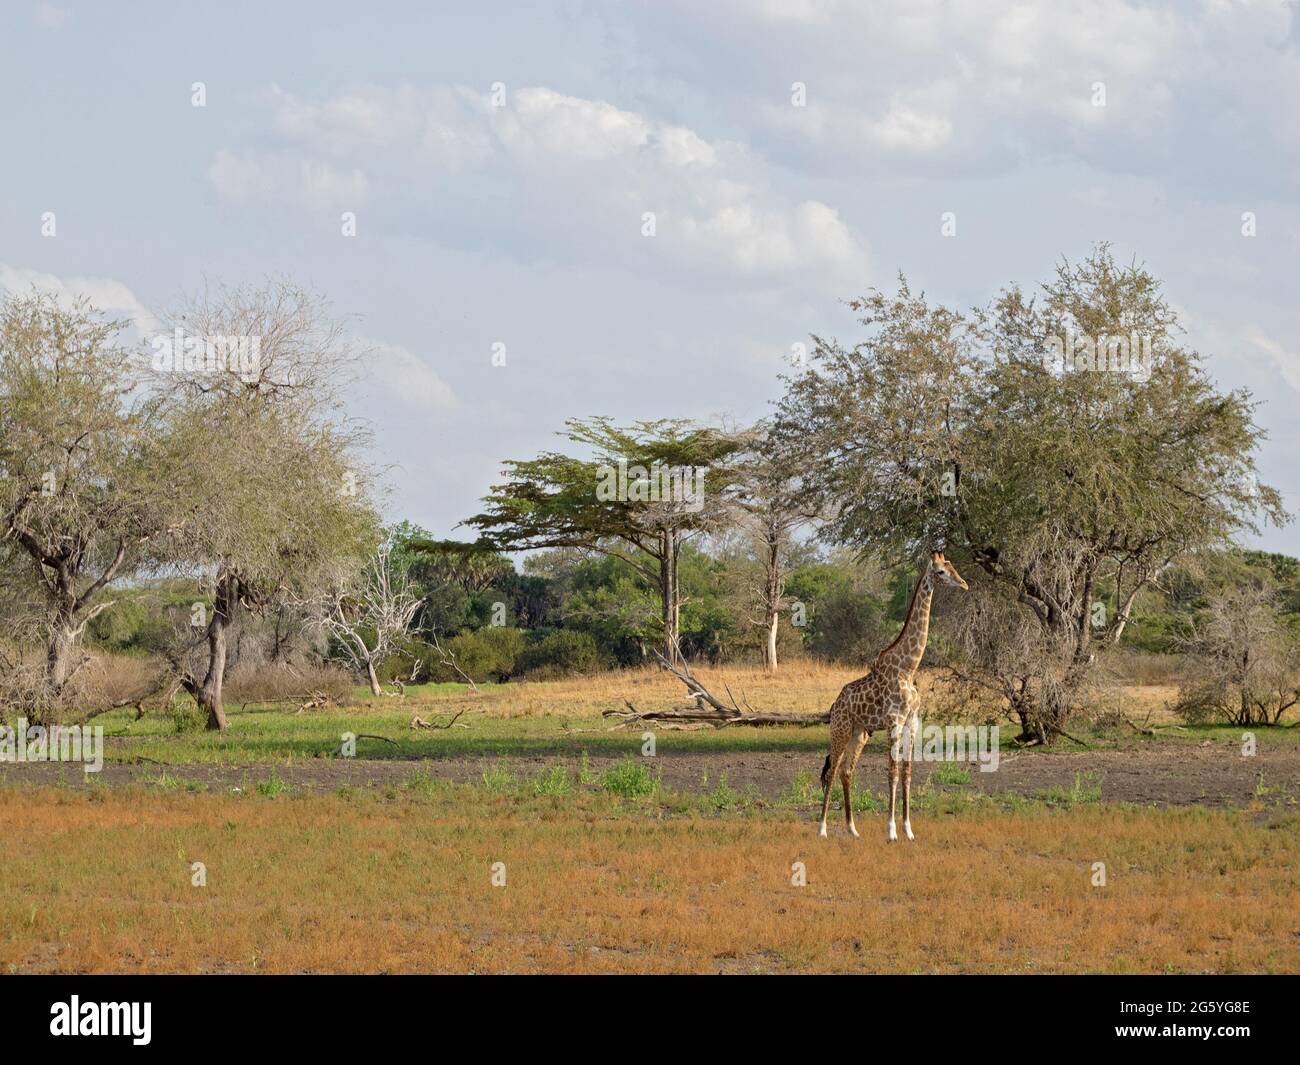 A single giraffe stands in a field. Stock Photo